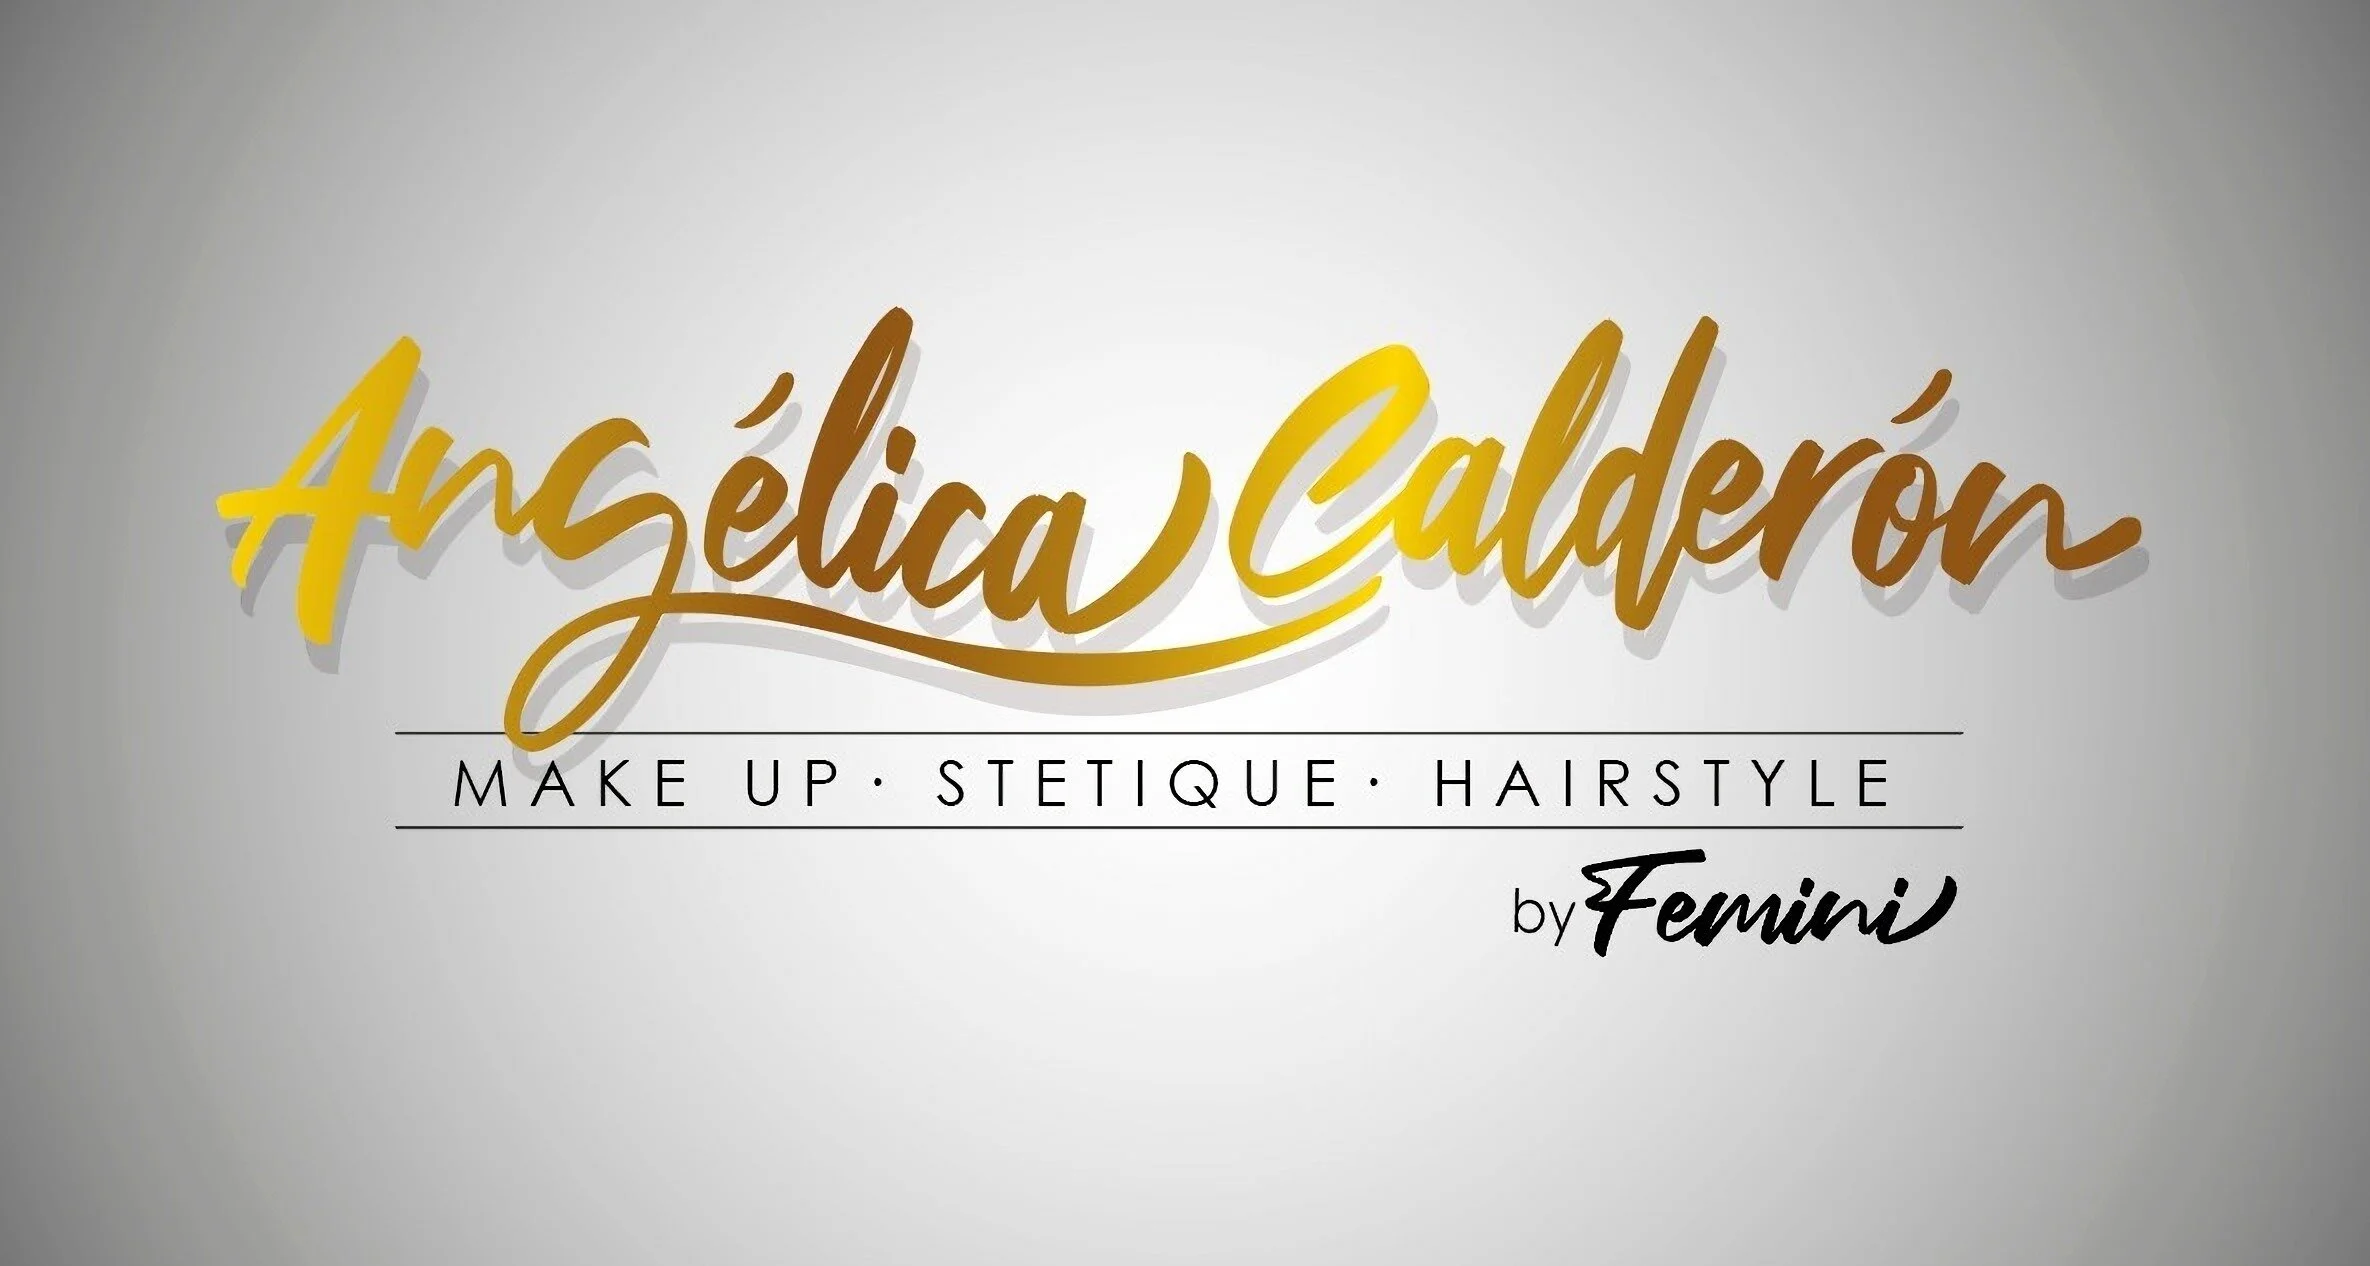 maquillaje-angelica-calderon-make-up-estetica-13544